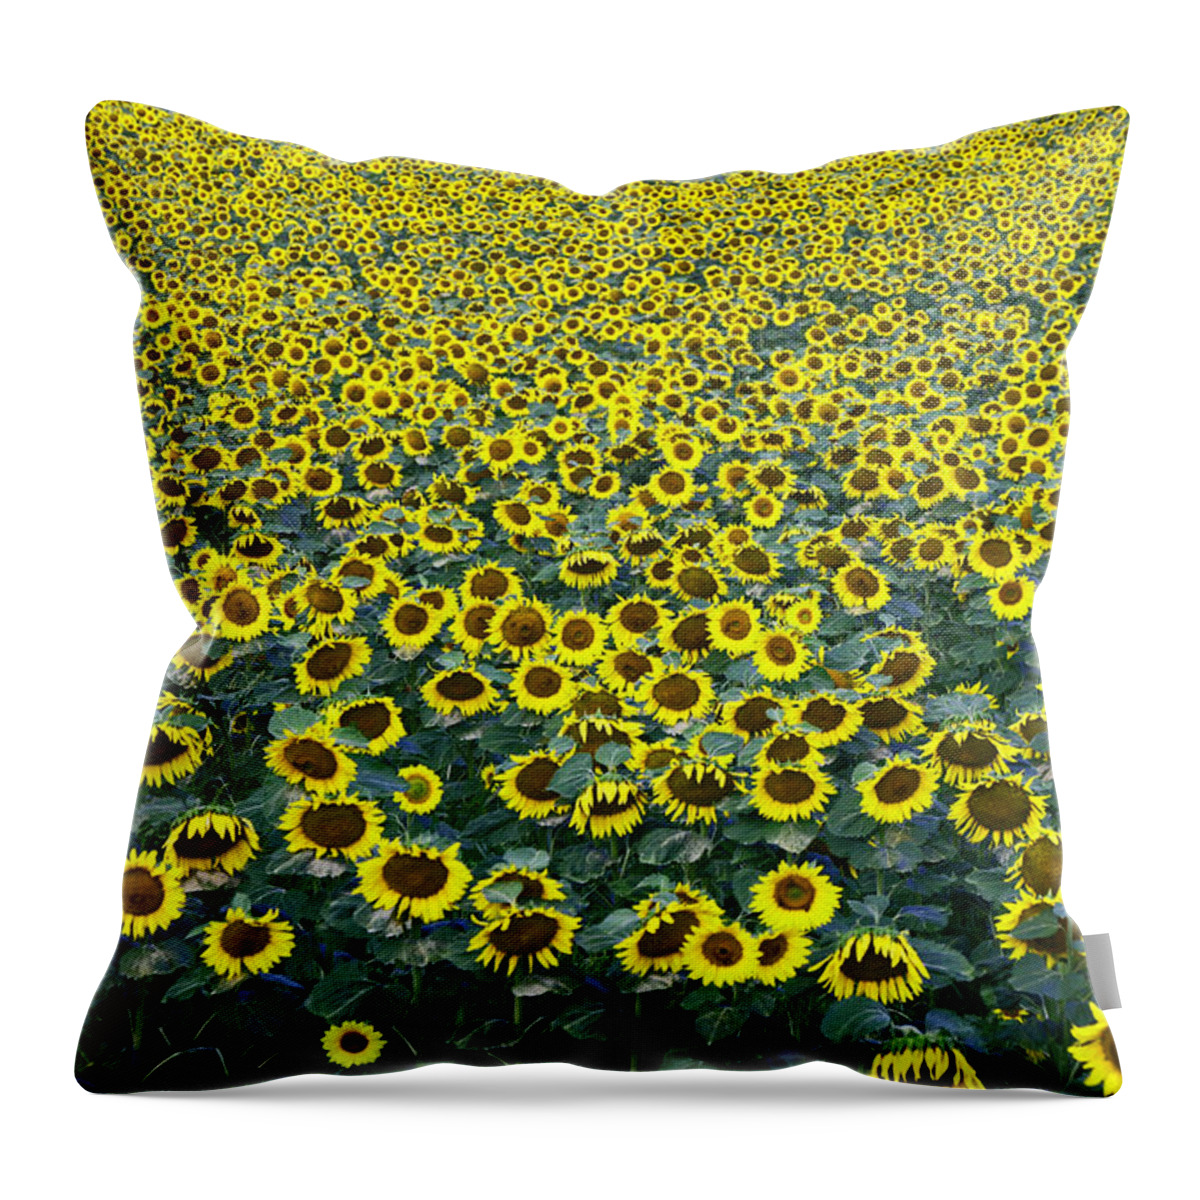 Yellow Throw Pillow featuring the photograph Sunflower Nirvana 13 by Allen Beatty